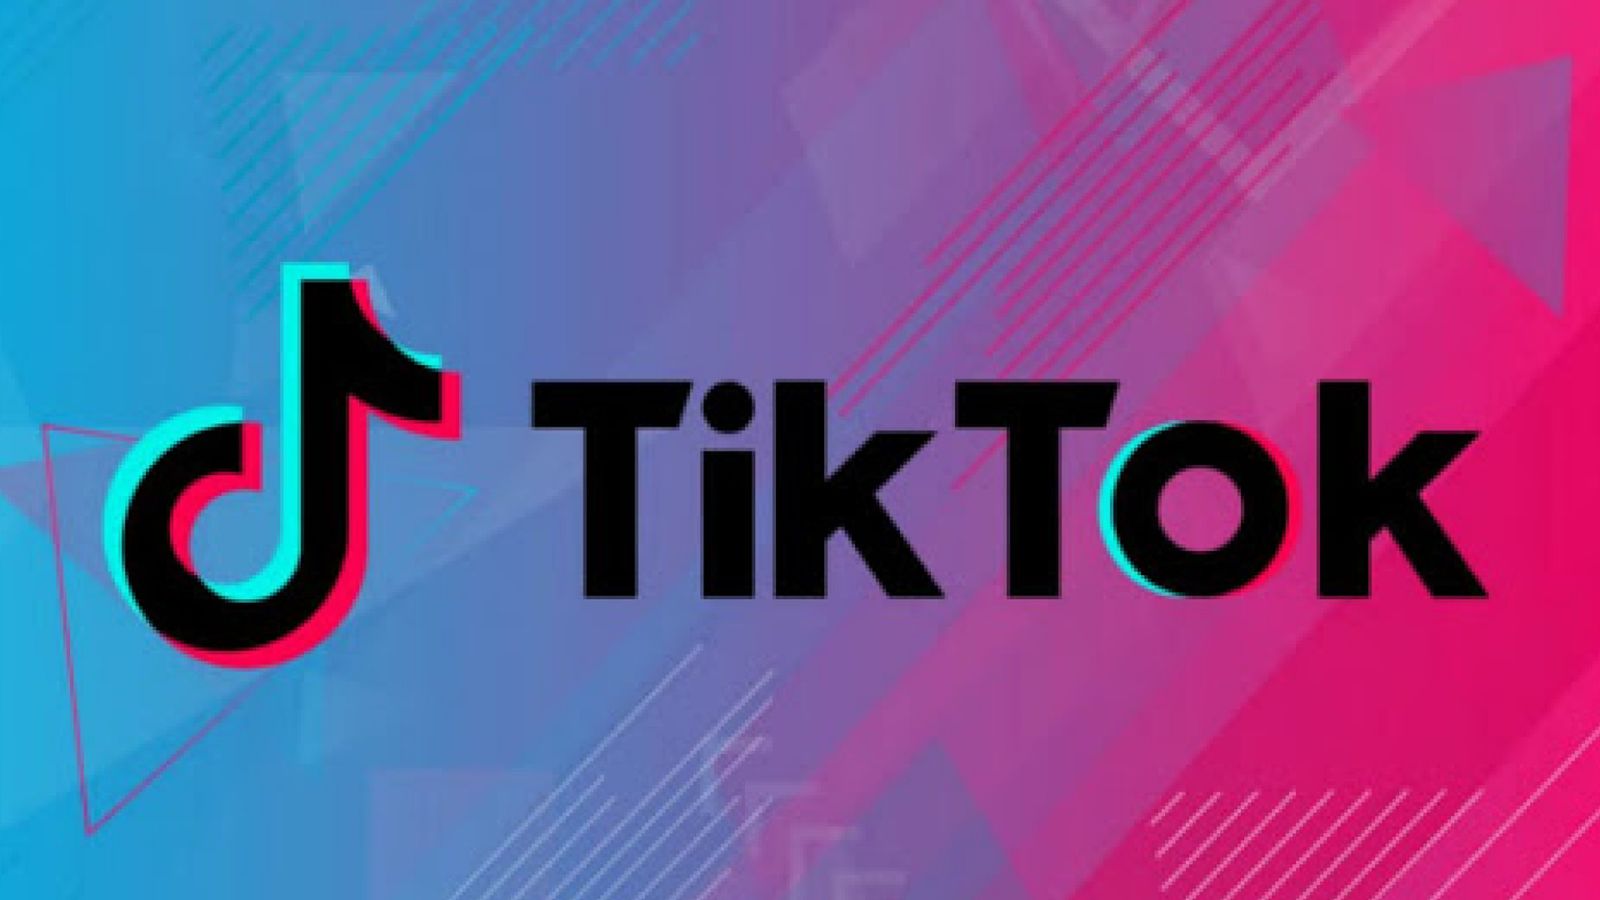 An image of TikTok's logo.